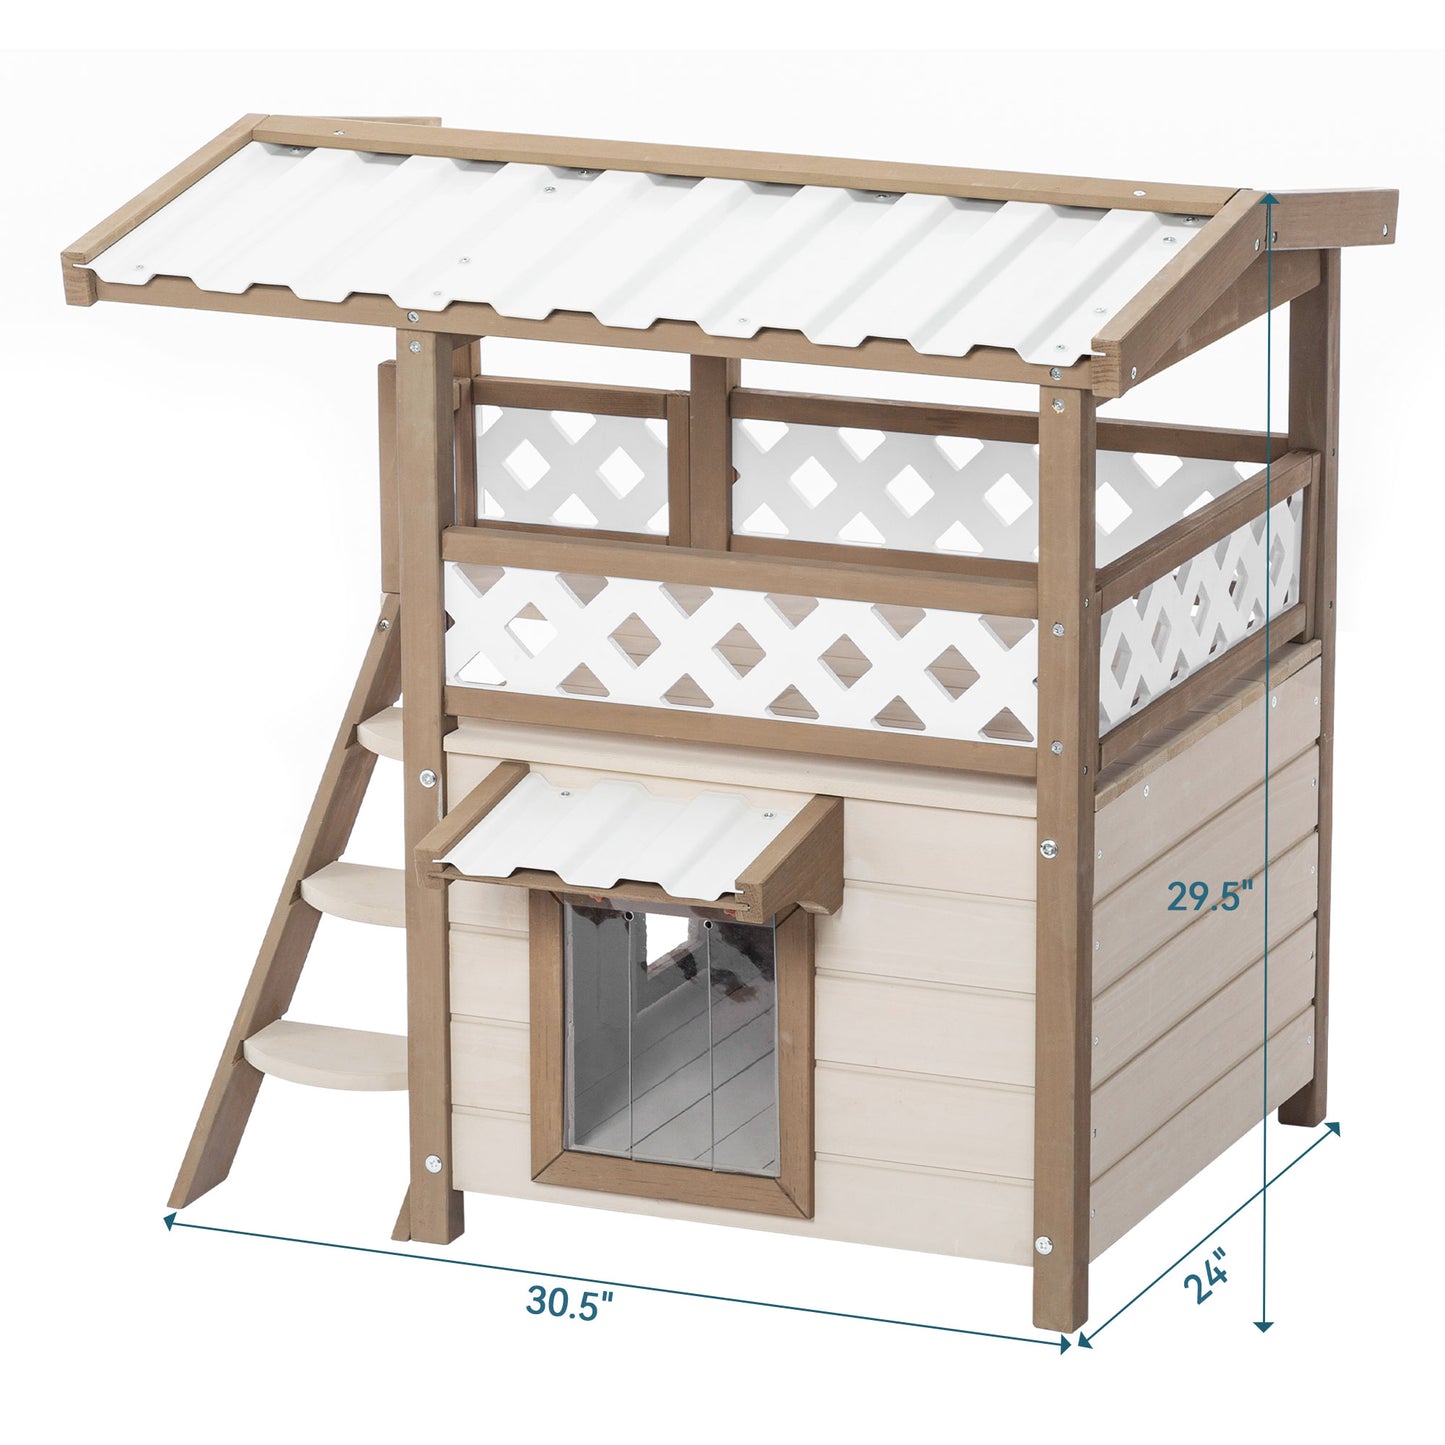 Outdoor/Indoor Two-Story Cat House